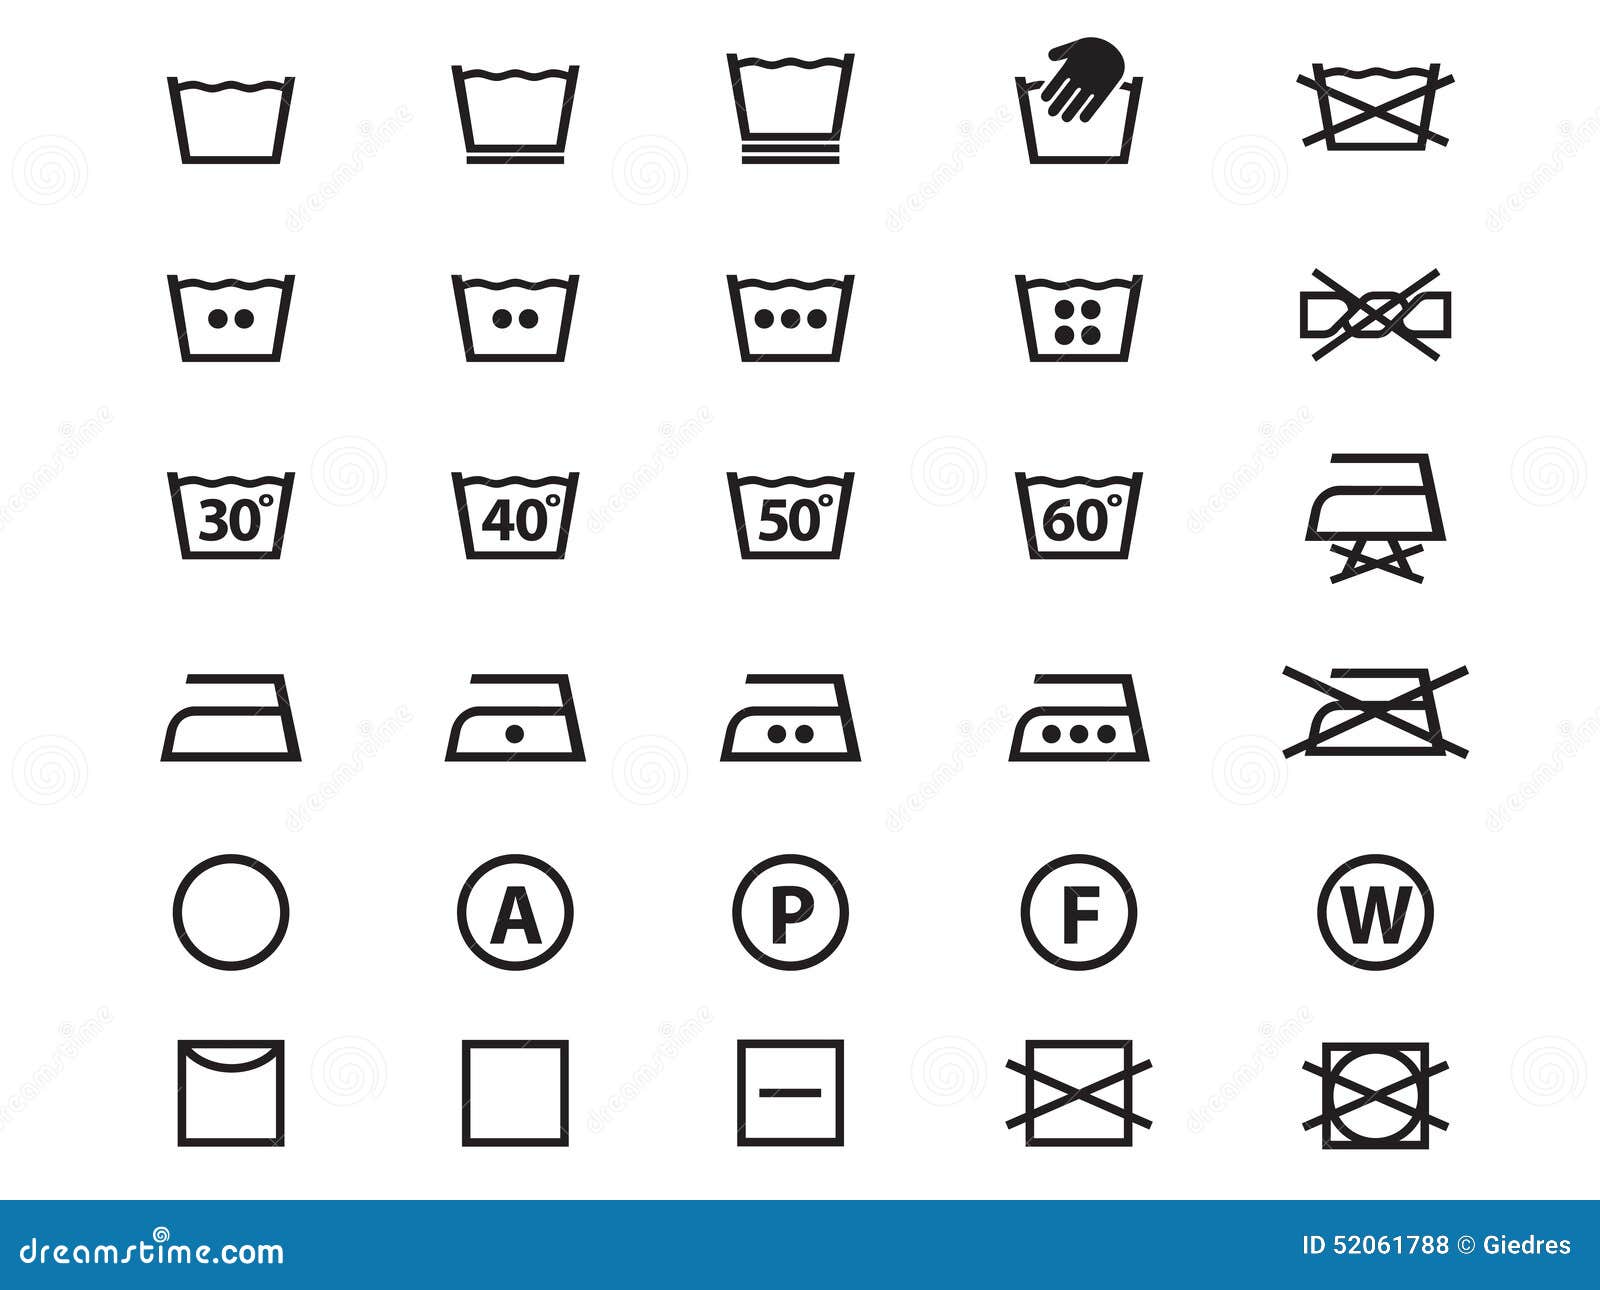 Free Printable Laundry Symbols Chart